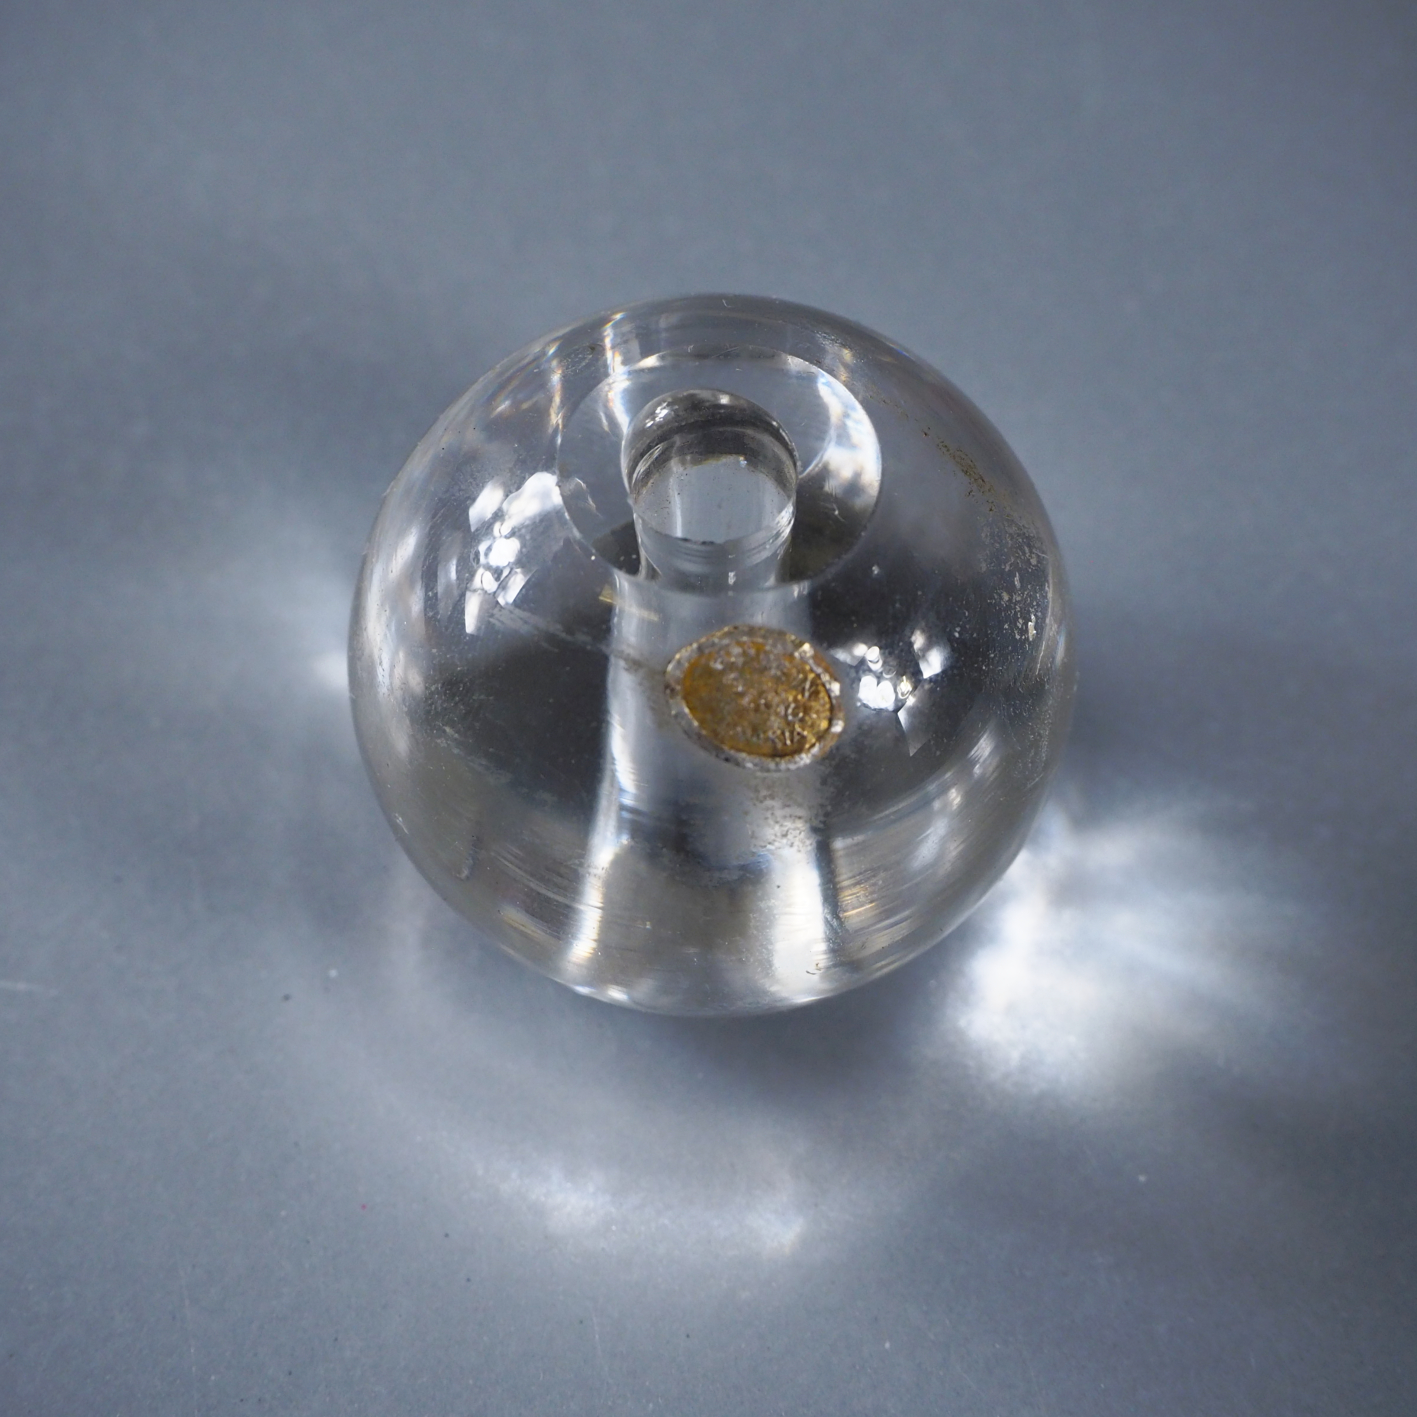 Cabinet knob in glass